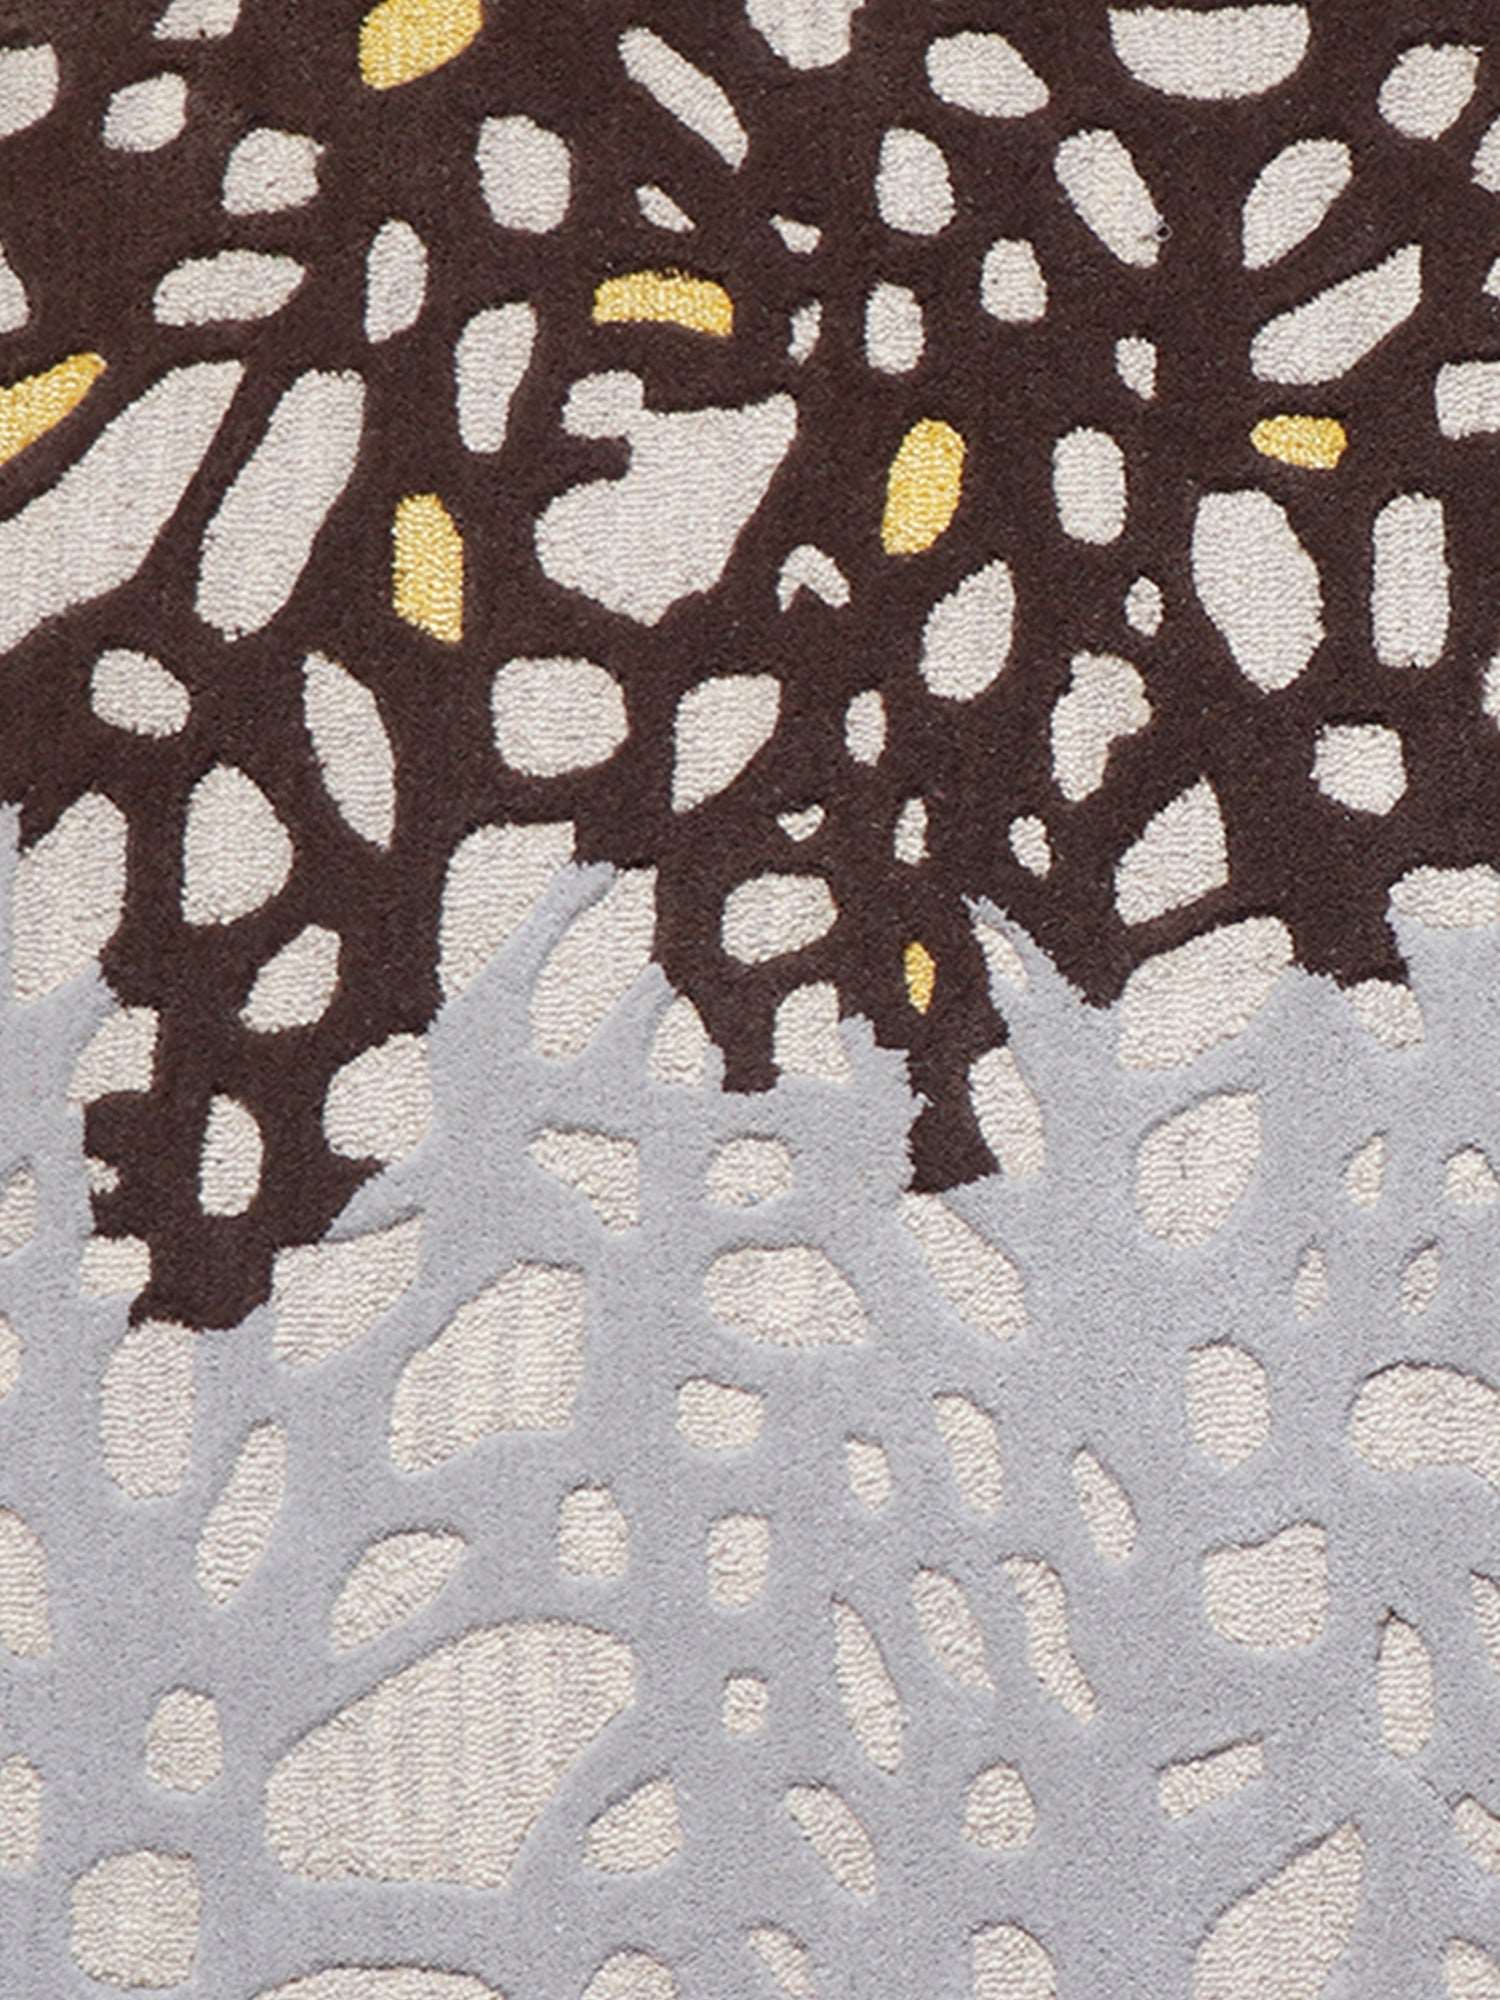 Carpet Hand Tufted 100% Woollen Mushroom Brown Animal Print - 4ft X 6ft